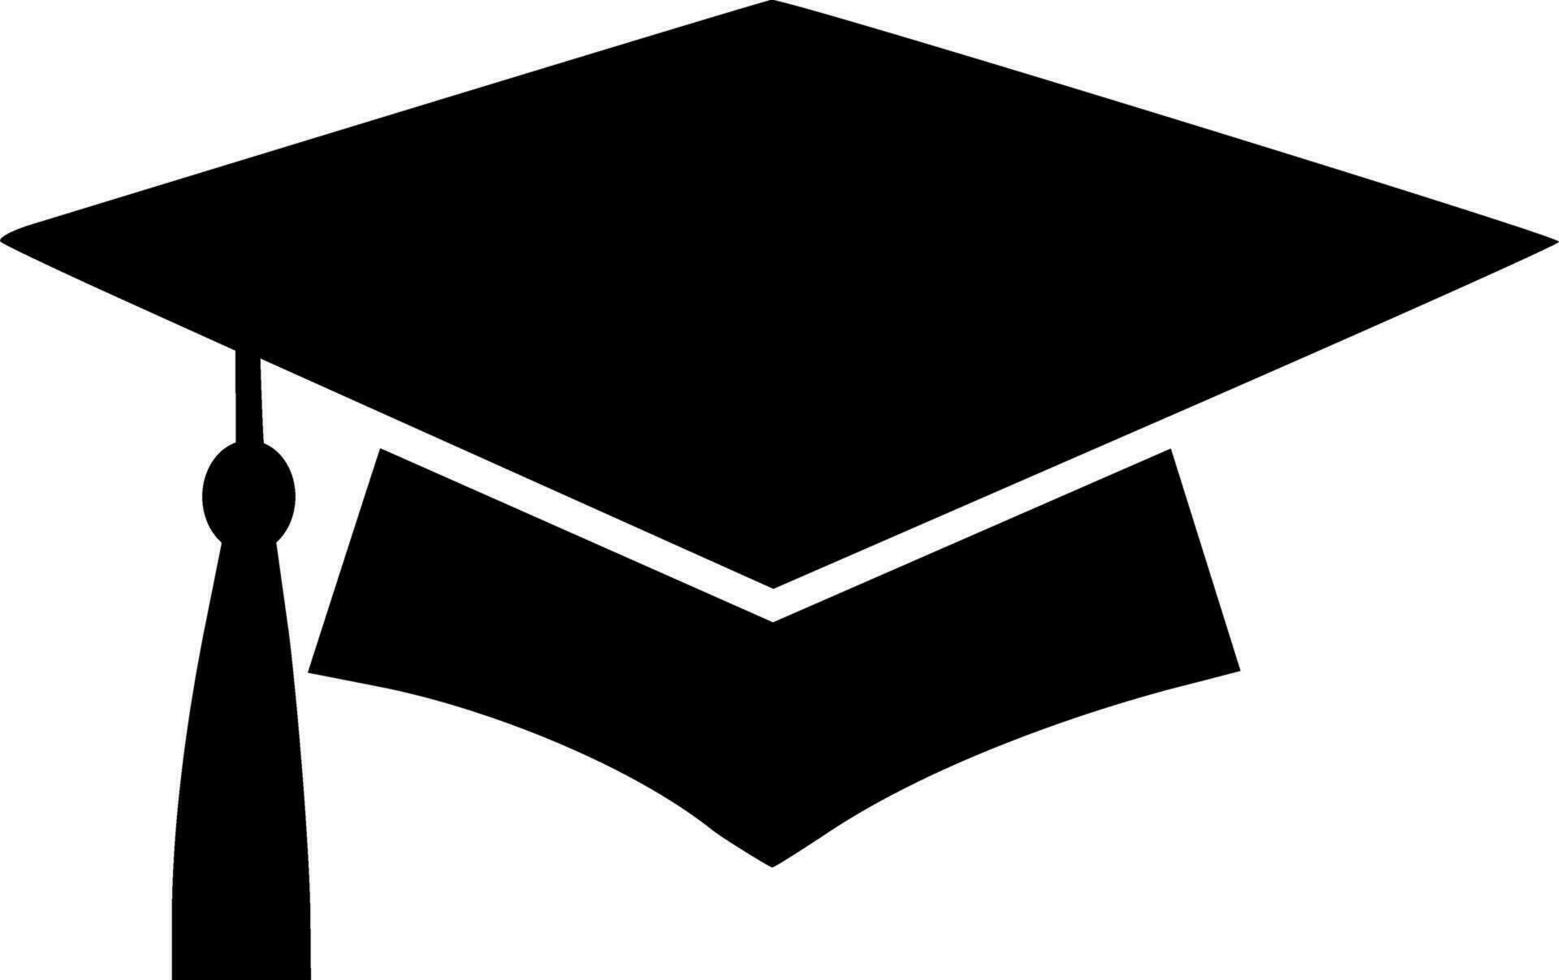 Graduation hat icon black outlines vector illustration